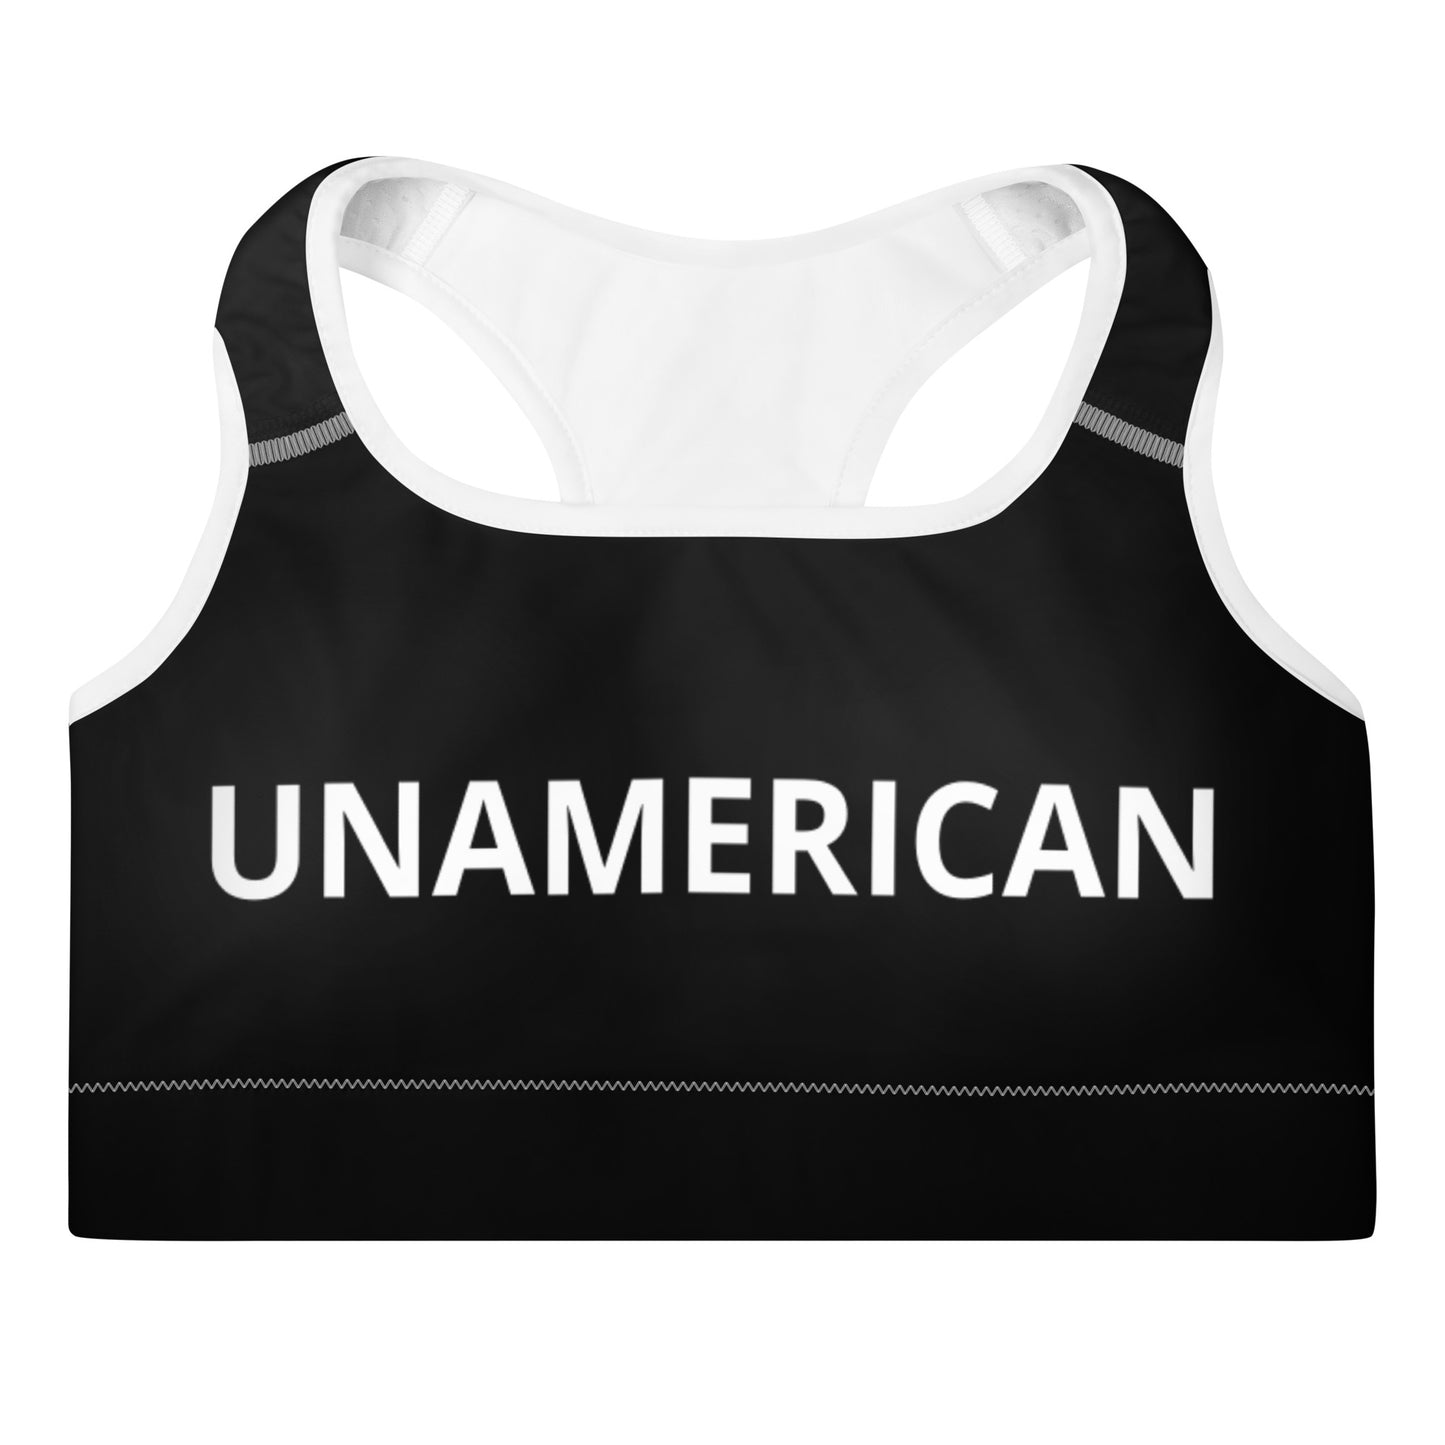 FN WOMEN'S SPORTS: Unamerican Sports Bra (black/white)